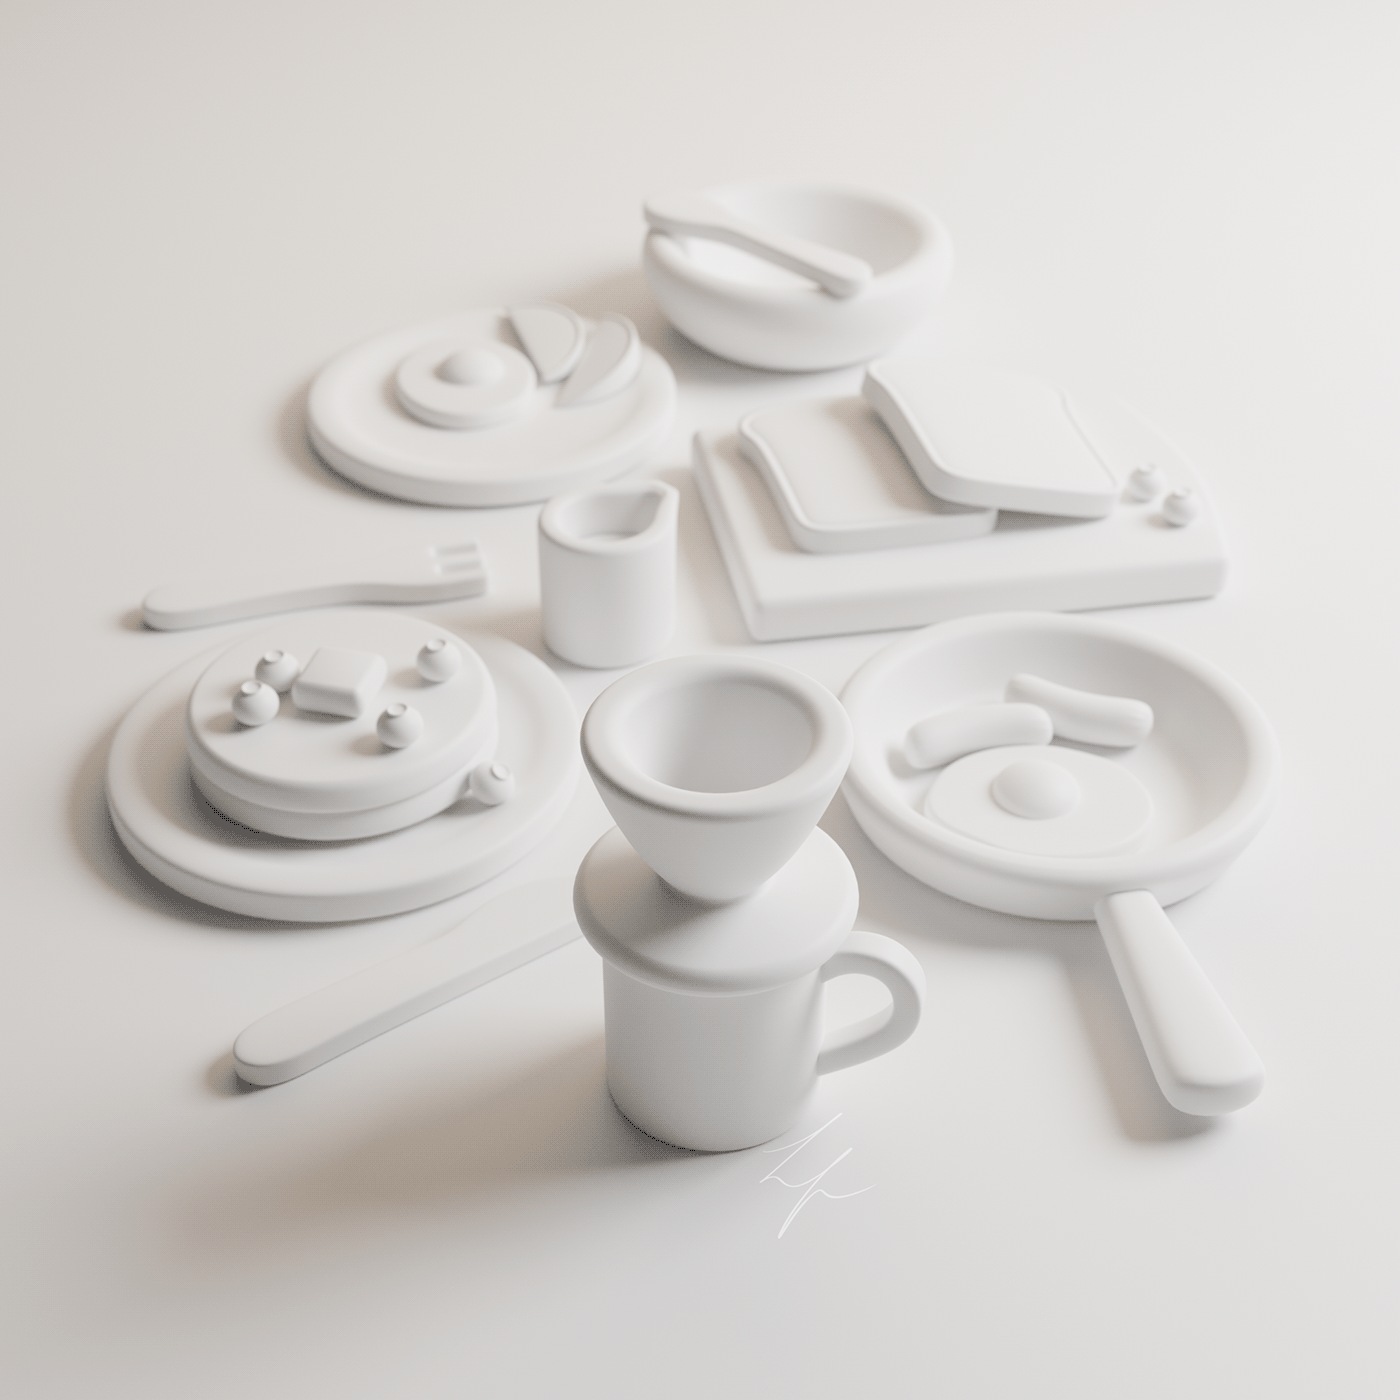 3D model 3d modeling blender3d breakfast cute Miniature toy design  toys